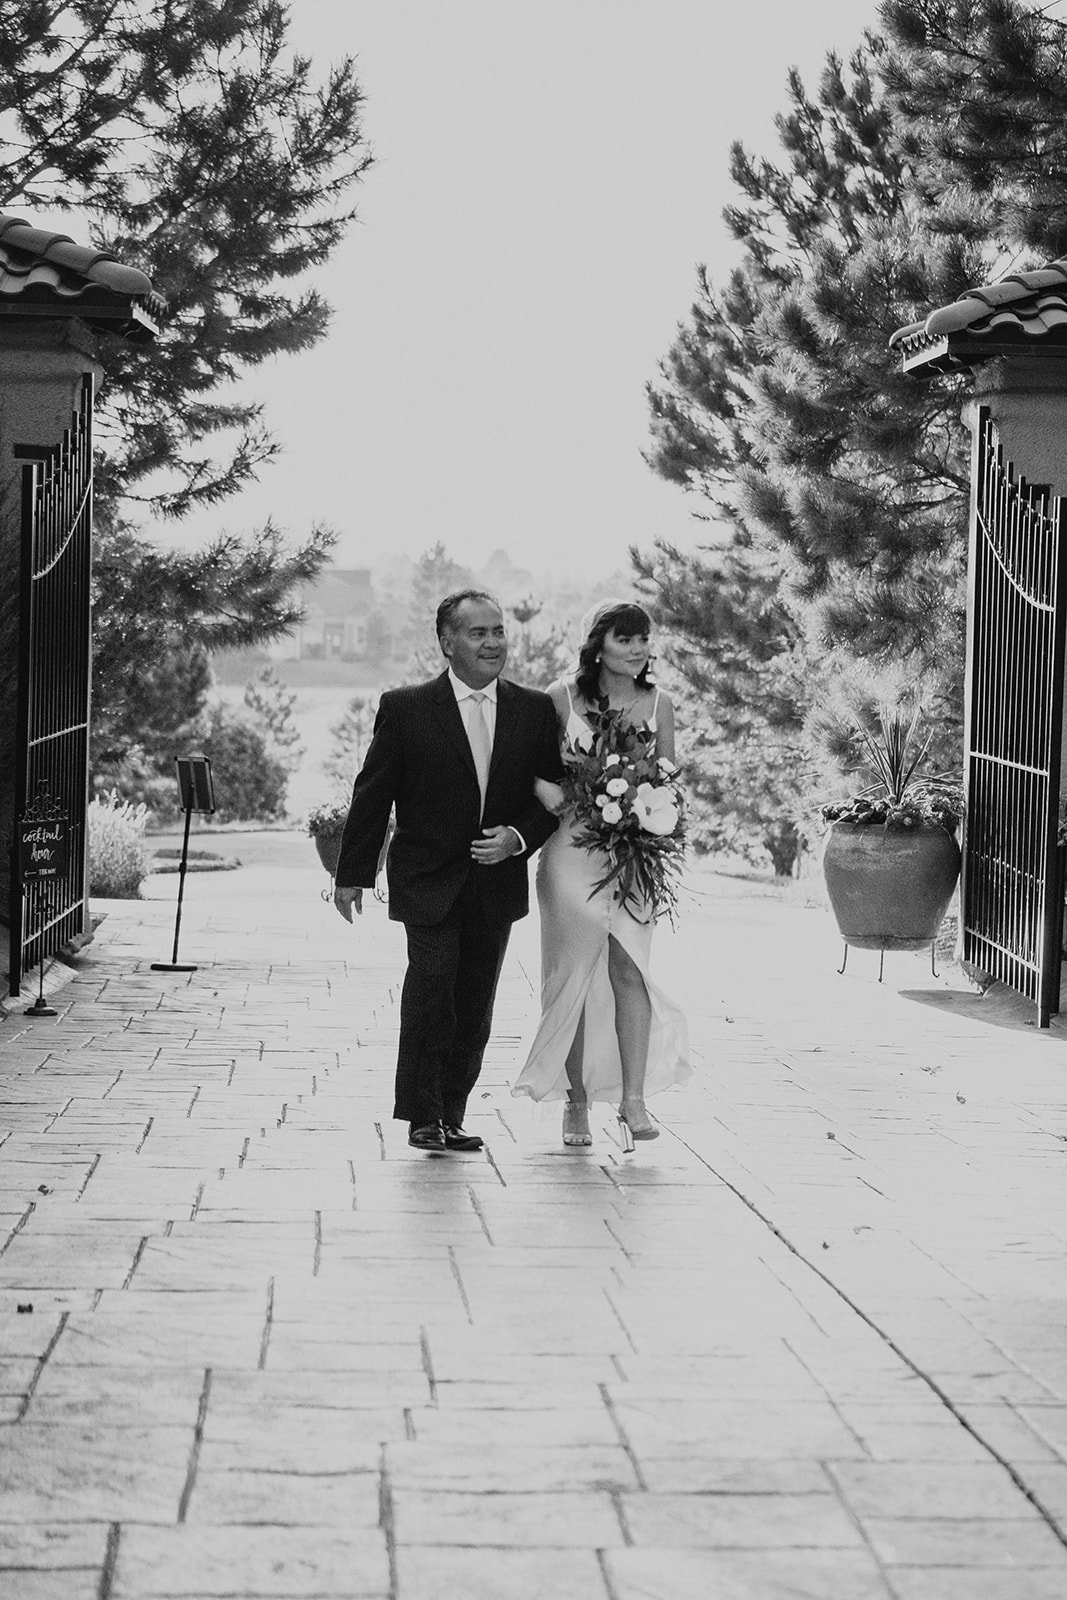 villa-parker-wedding-photographer-madeline-j-studios20200920-180412-2_websize.jpg